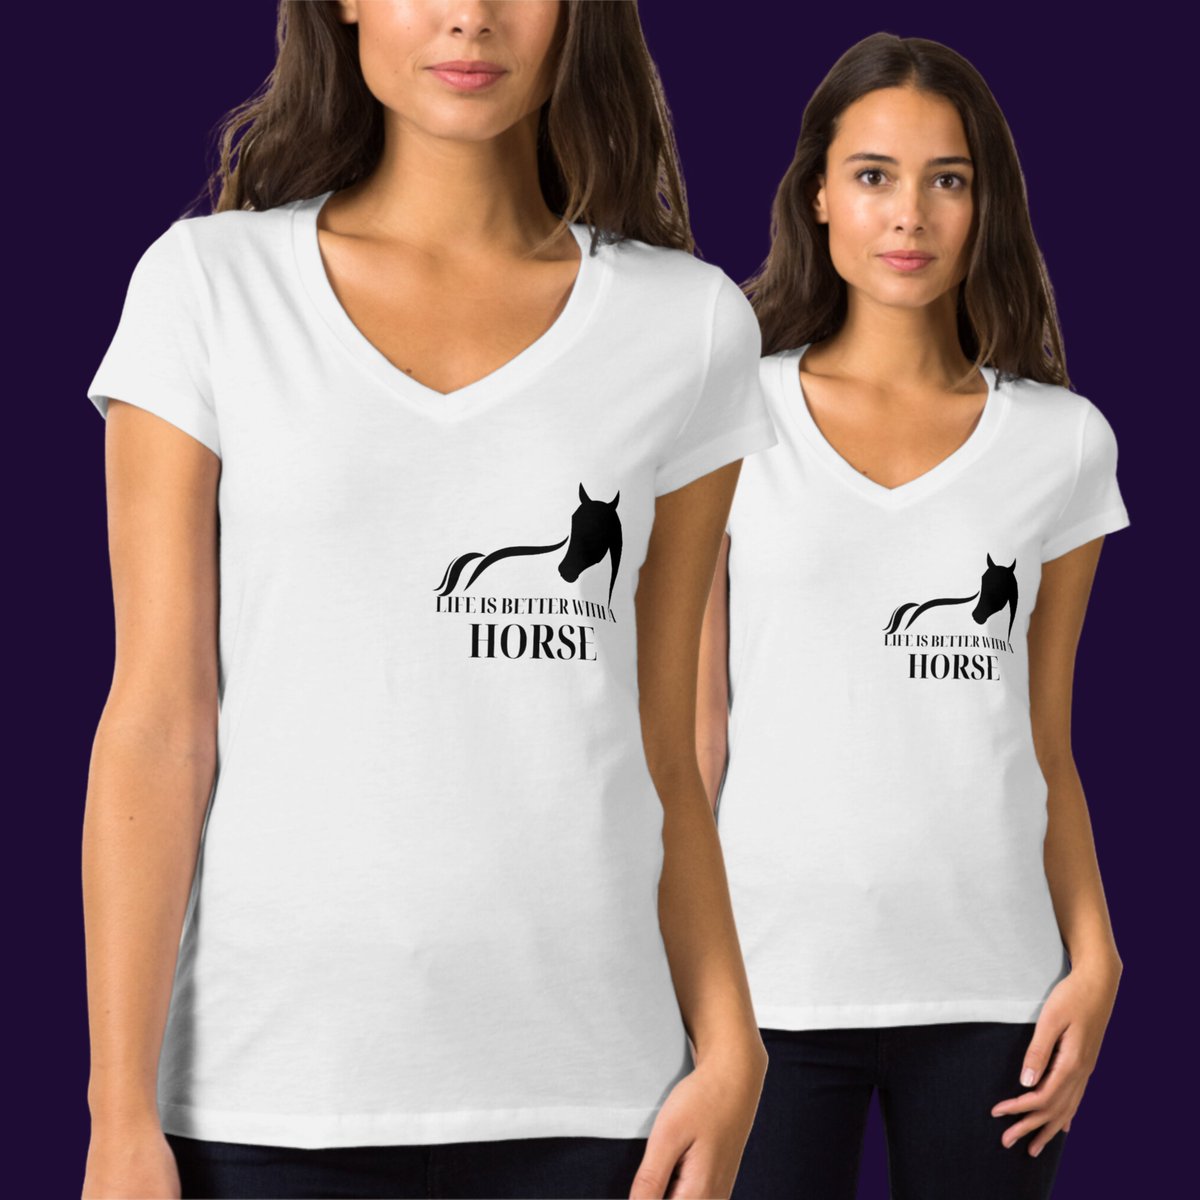 Life Is Better With Horse, Horseman Gift T-Shirt zazzle.com/z/bf8jx71t?rf=… via @zazzle #horsevideo #horse #HorseRacing #horsegirl #horseriding #tshirt #TShirtDay #tshirtdesign #tshirtprinting #horselovers